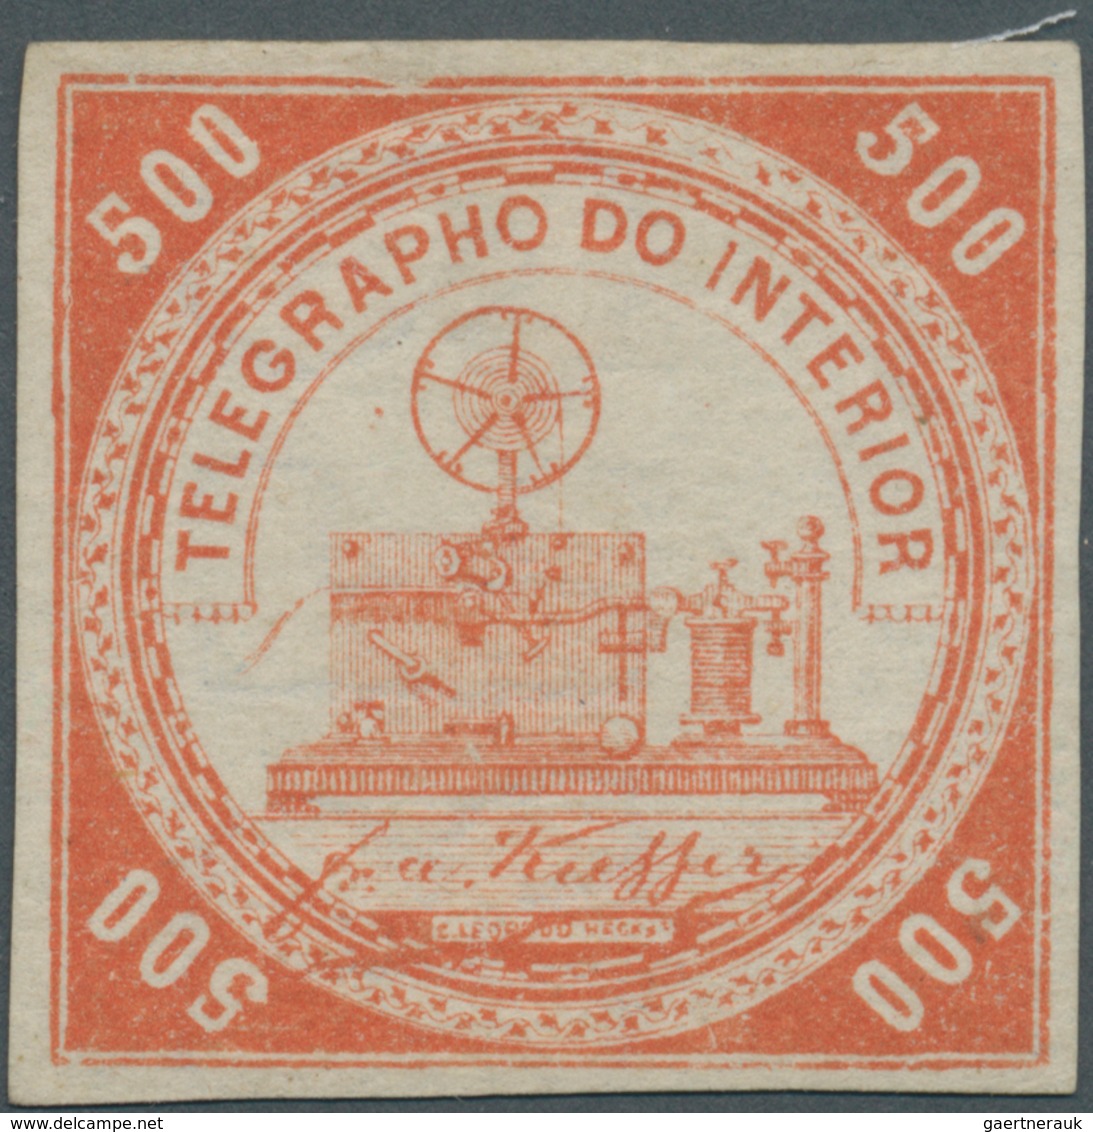 00587 Brasilien - Telegrafenmarken: 1873, 500r. Vermilion, Wm "Lacroix Freres", Fresh Colour, Full Margins - Telegraphenmarken